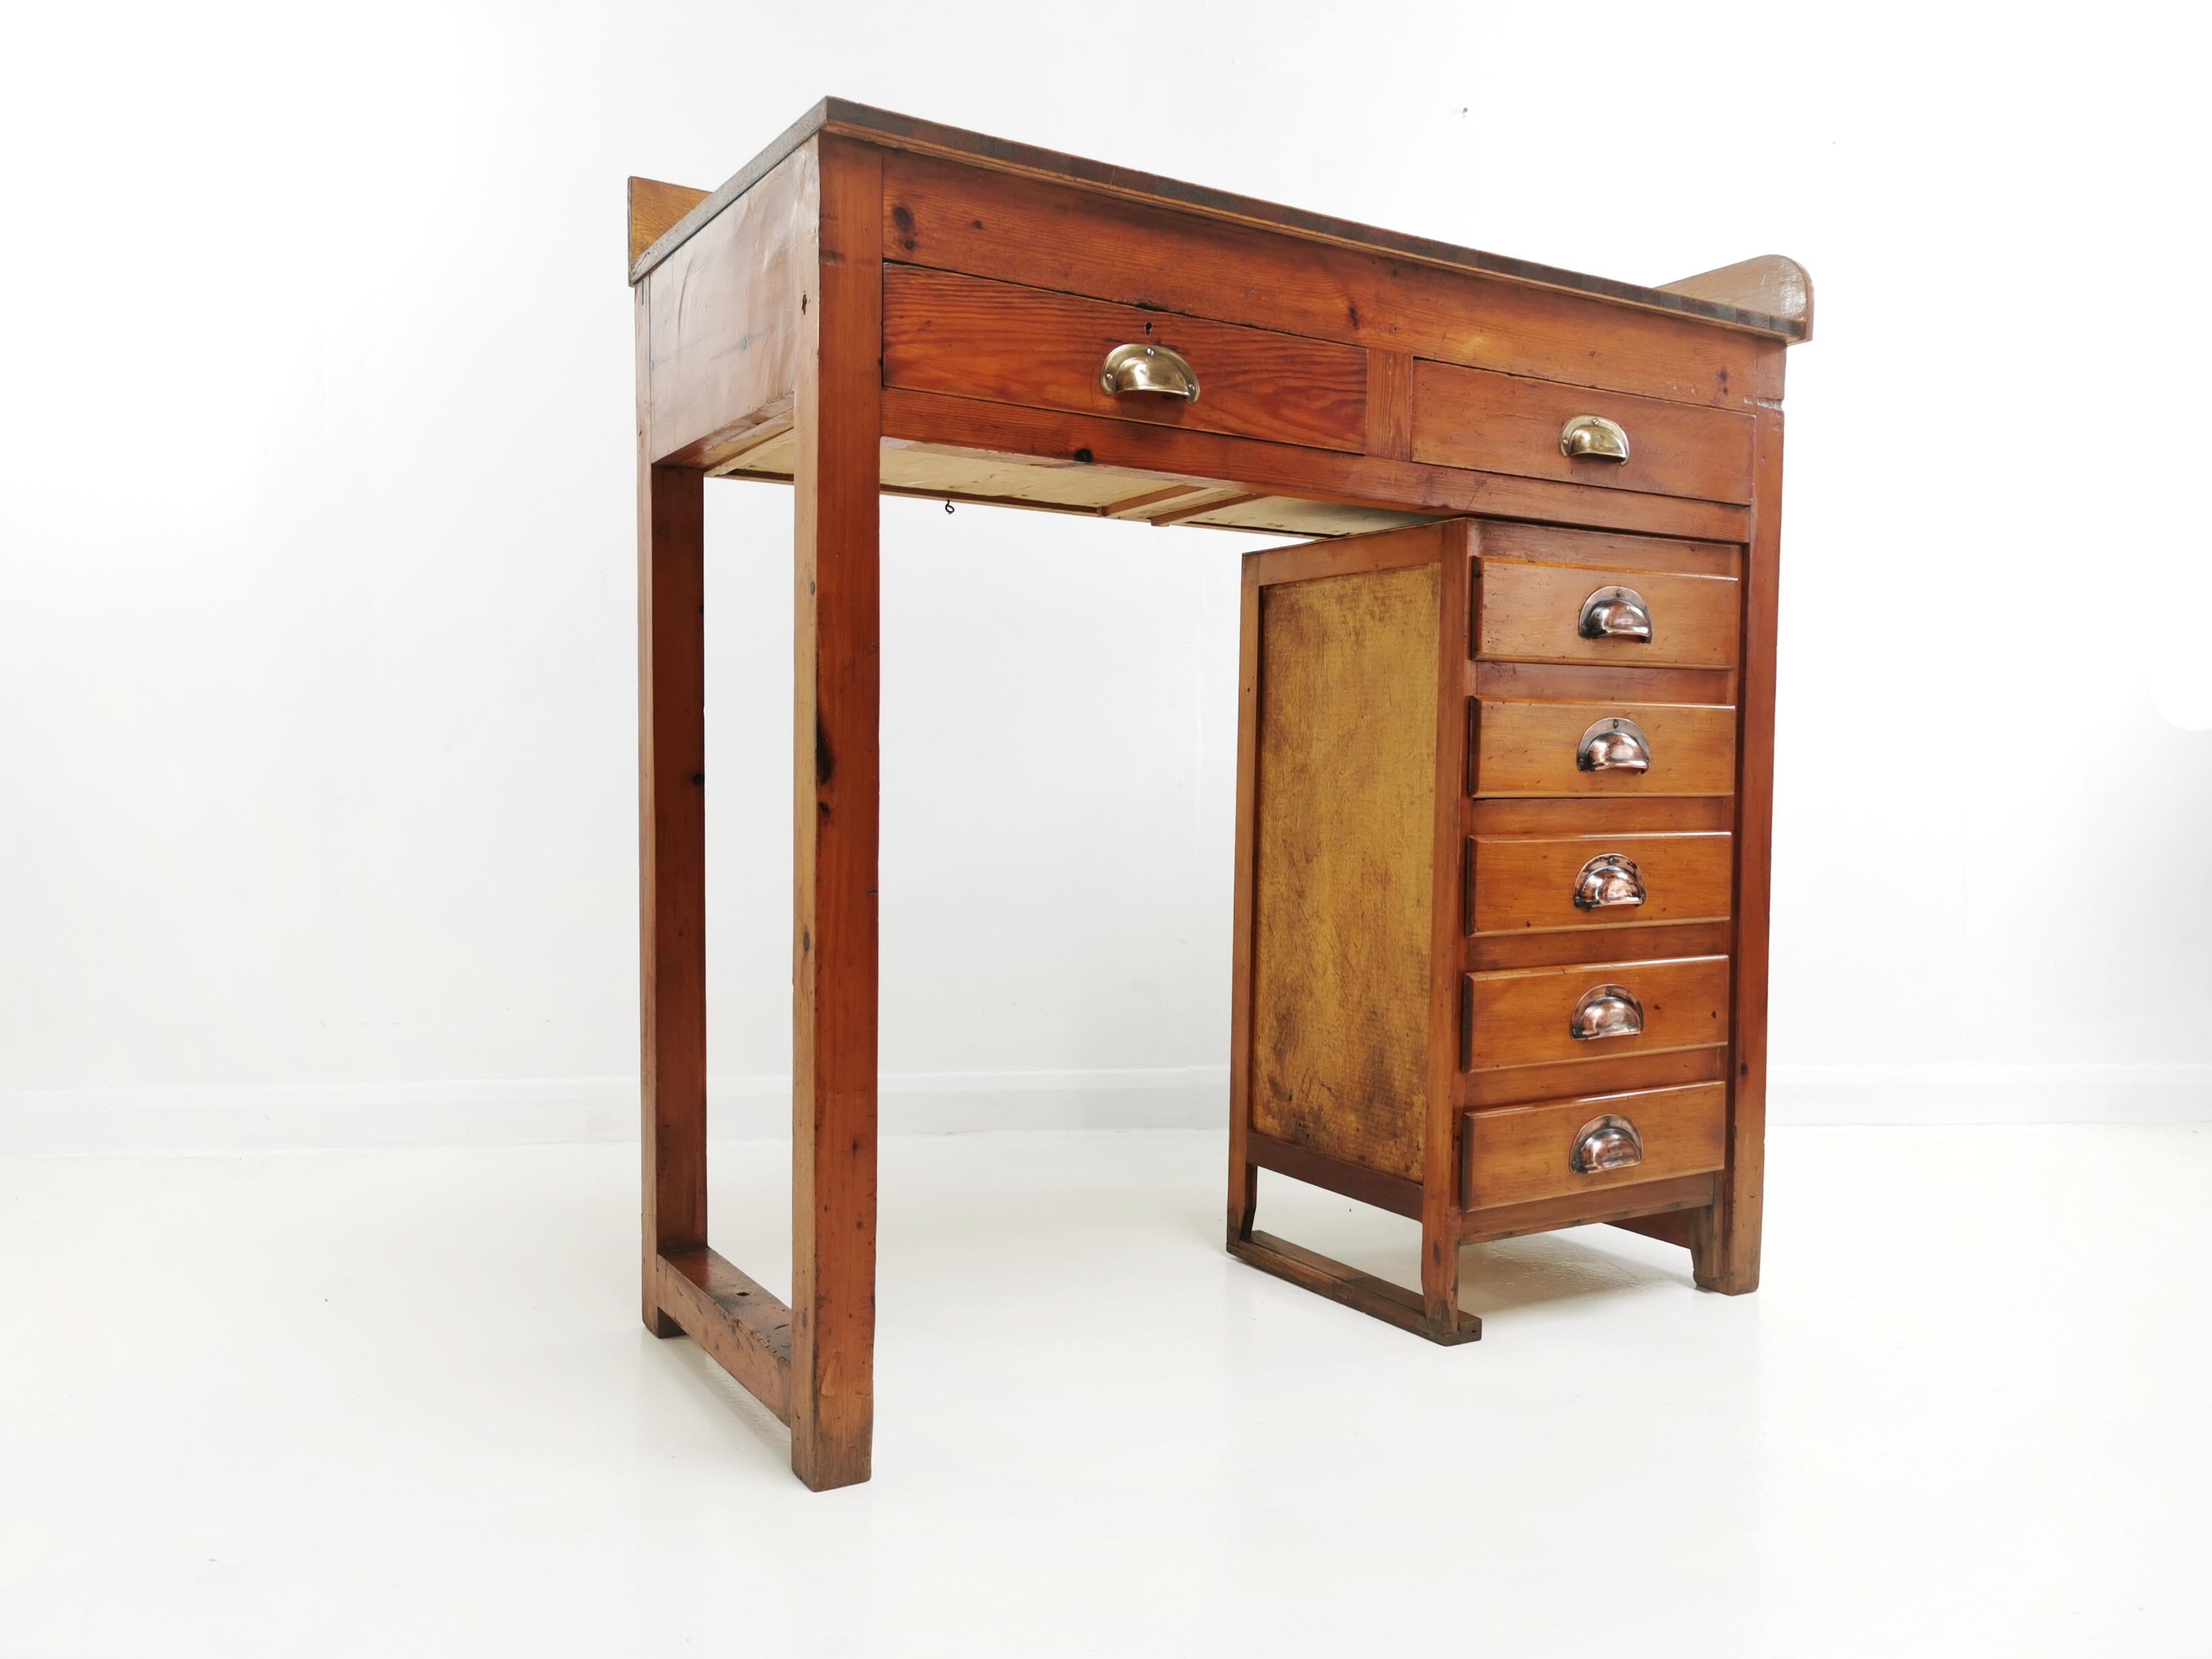 20th Century British Pine Watchmakers Work Bench Desk Midcentury